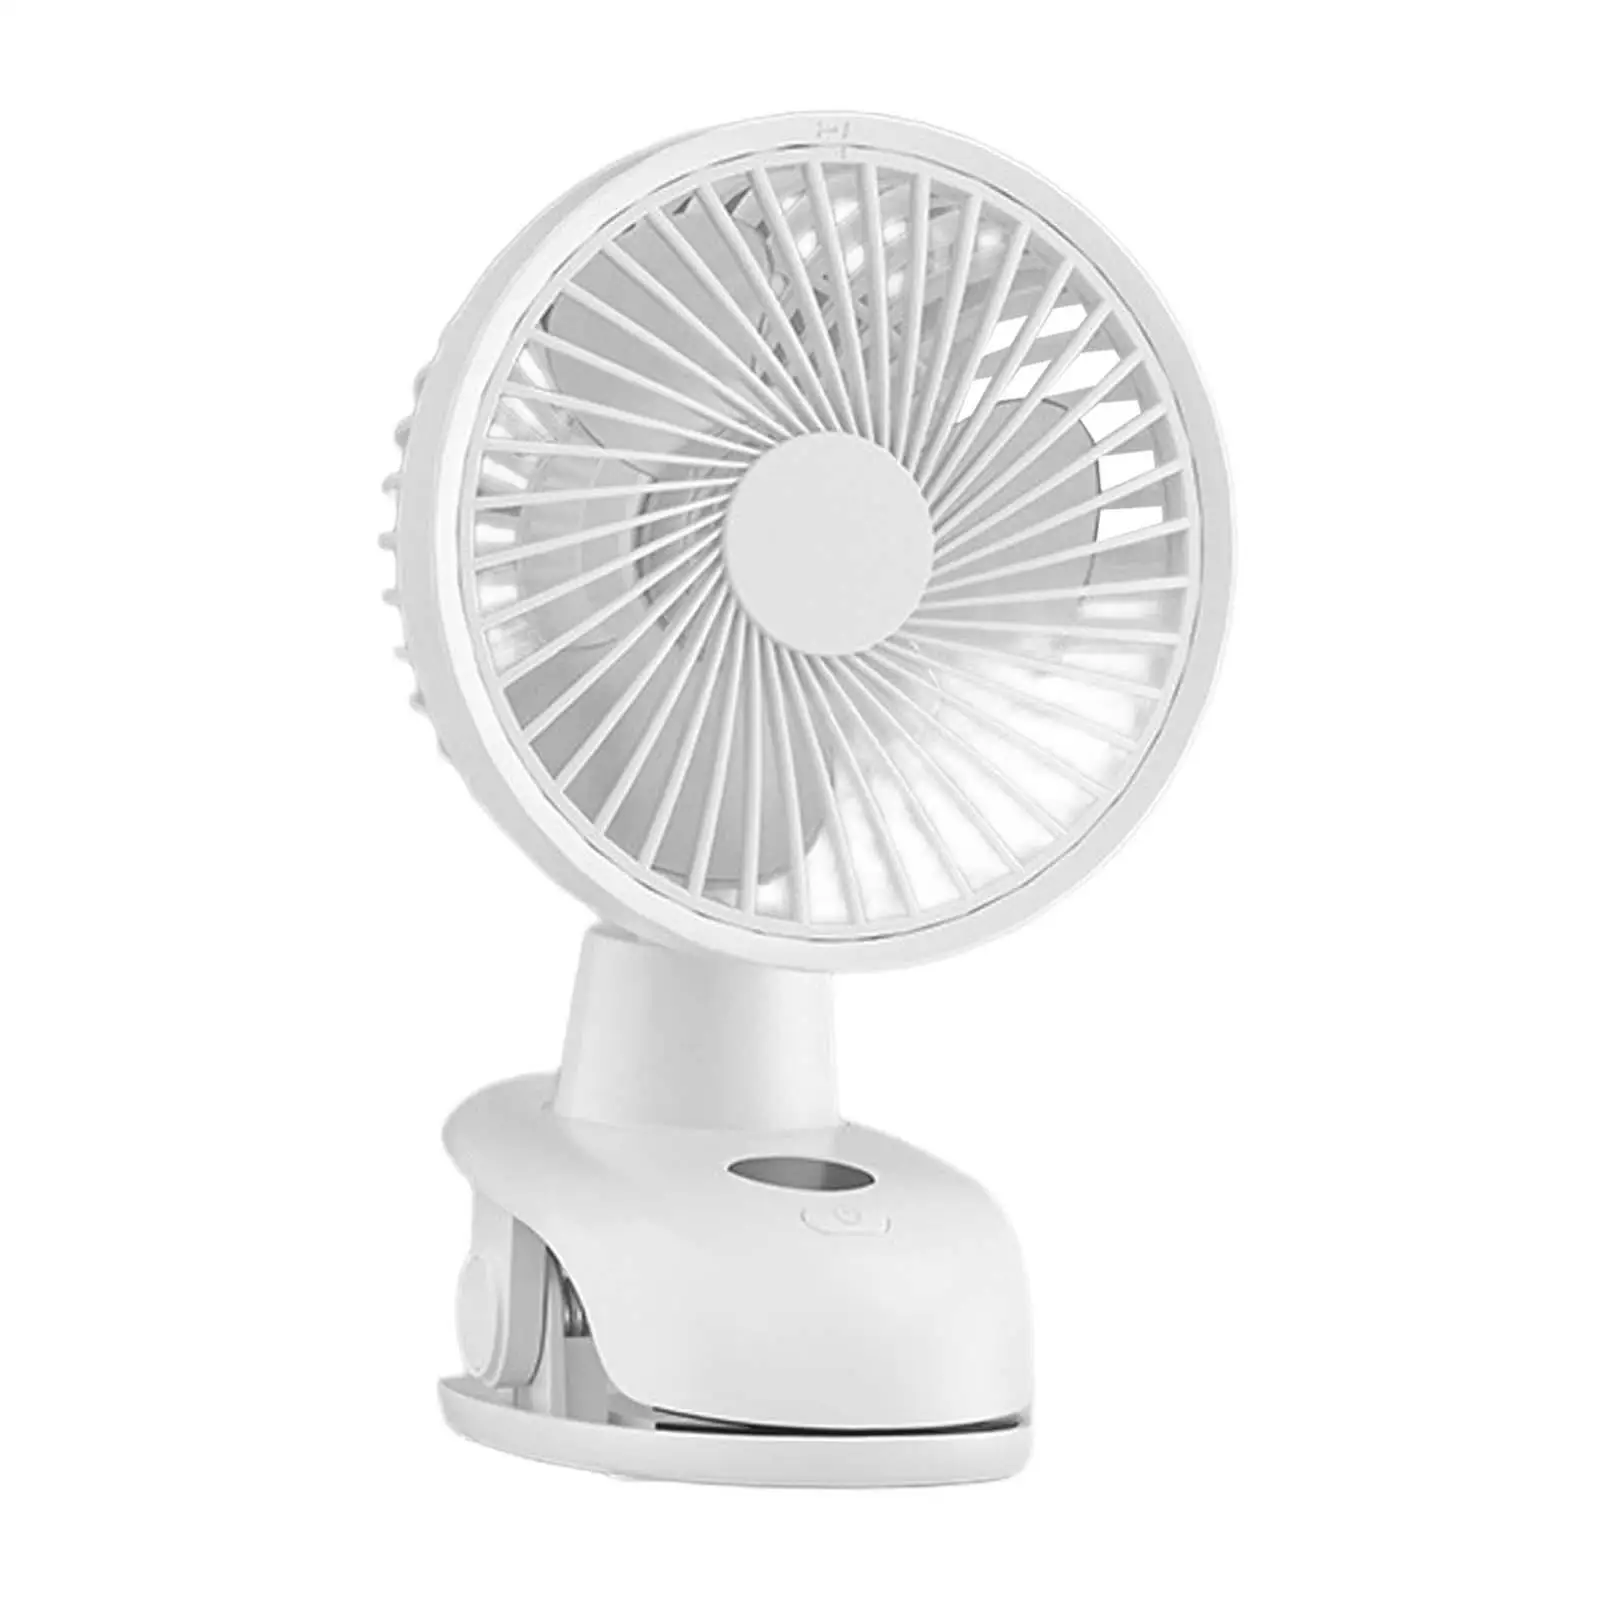 Portable Clip Fan Rechargeable LED Display 4 Speeds Quiet USB Desk Fan Table Fan Auto Oscillating Fan for Camping Bedroom